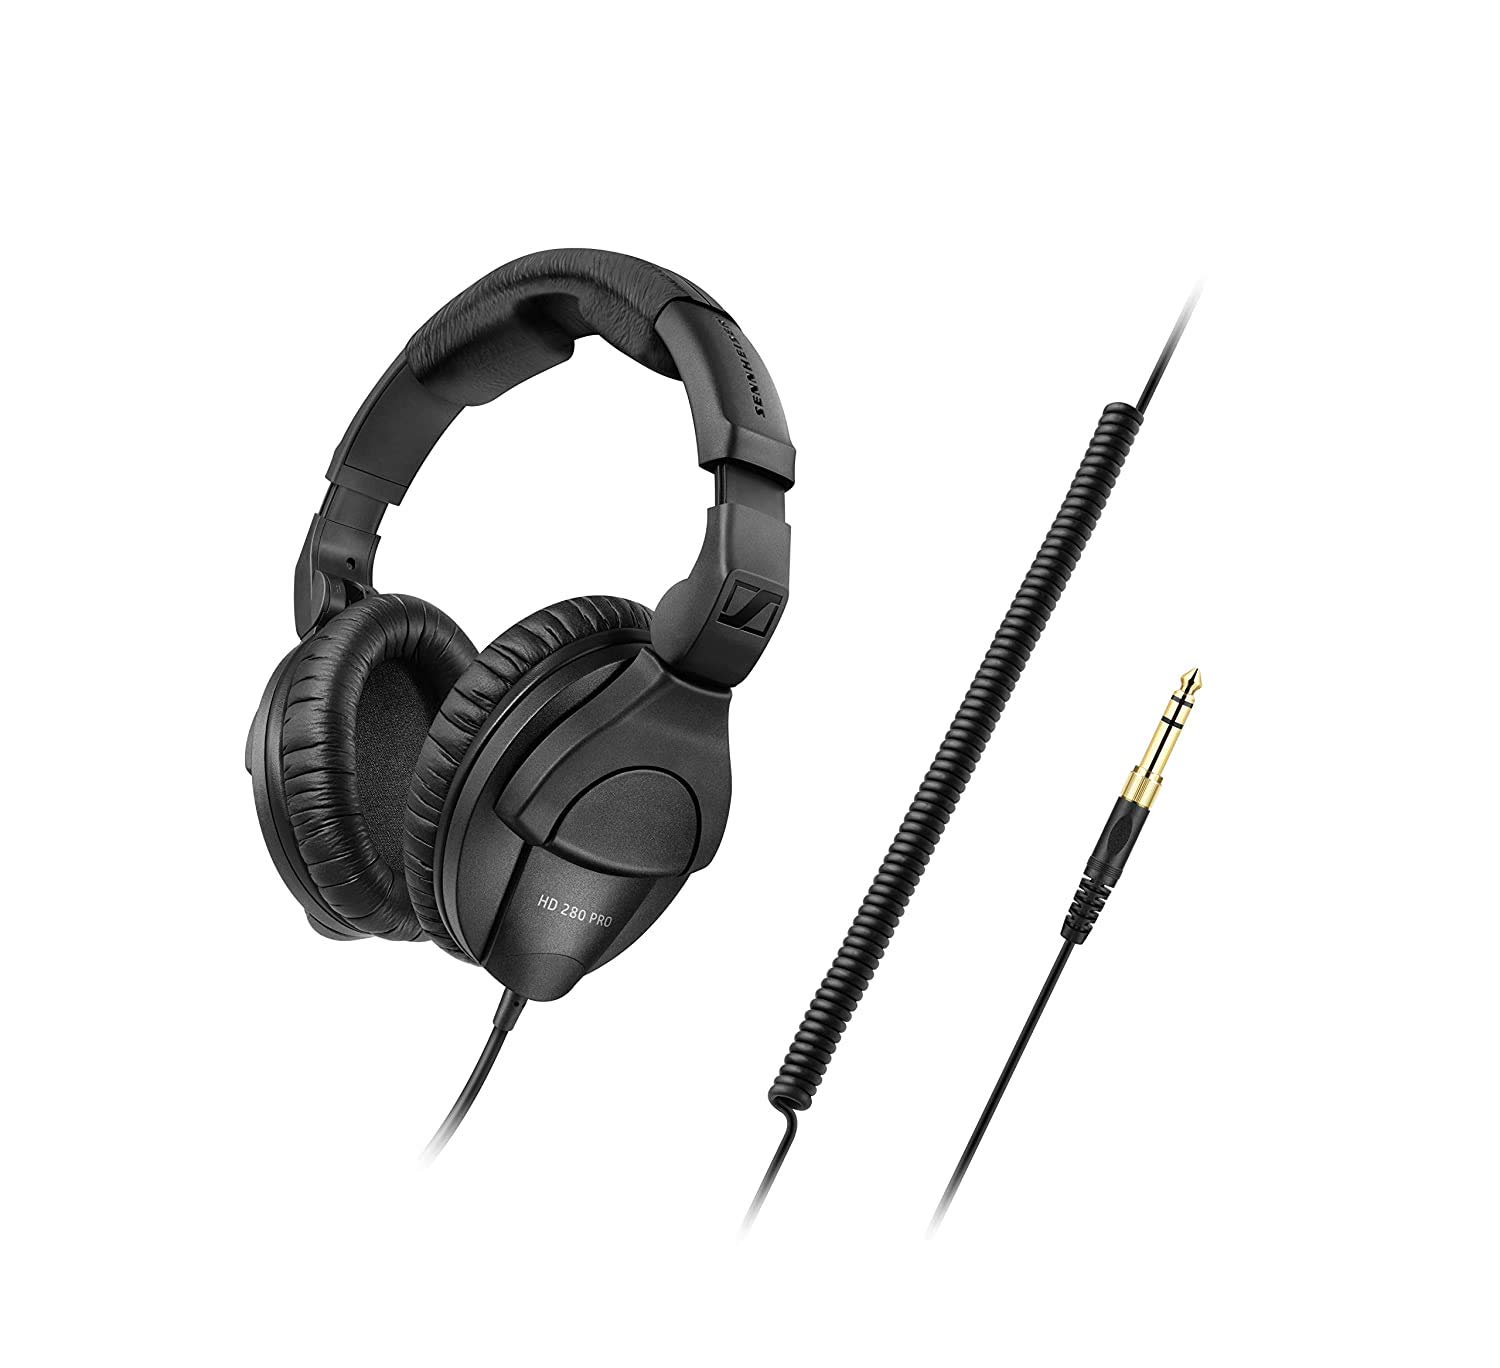 Sennheiser Professional HD 280 PRO Over-Ear Monitoring Headphones,Black